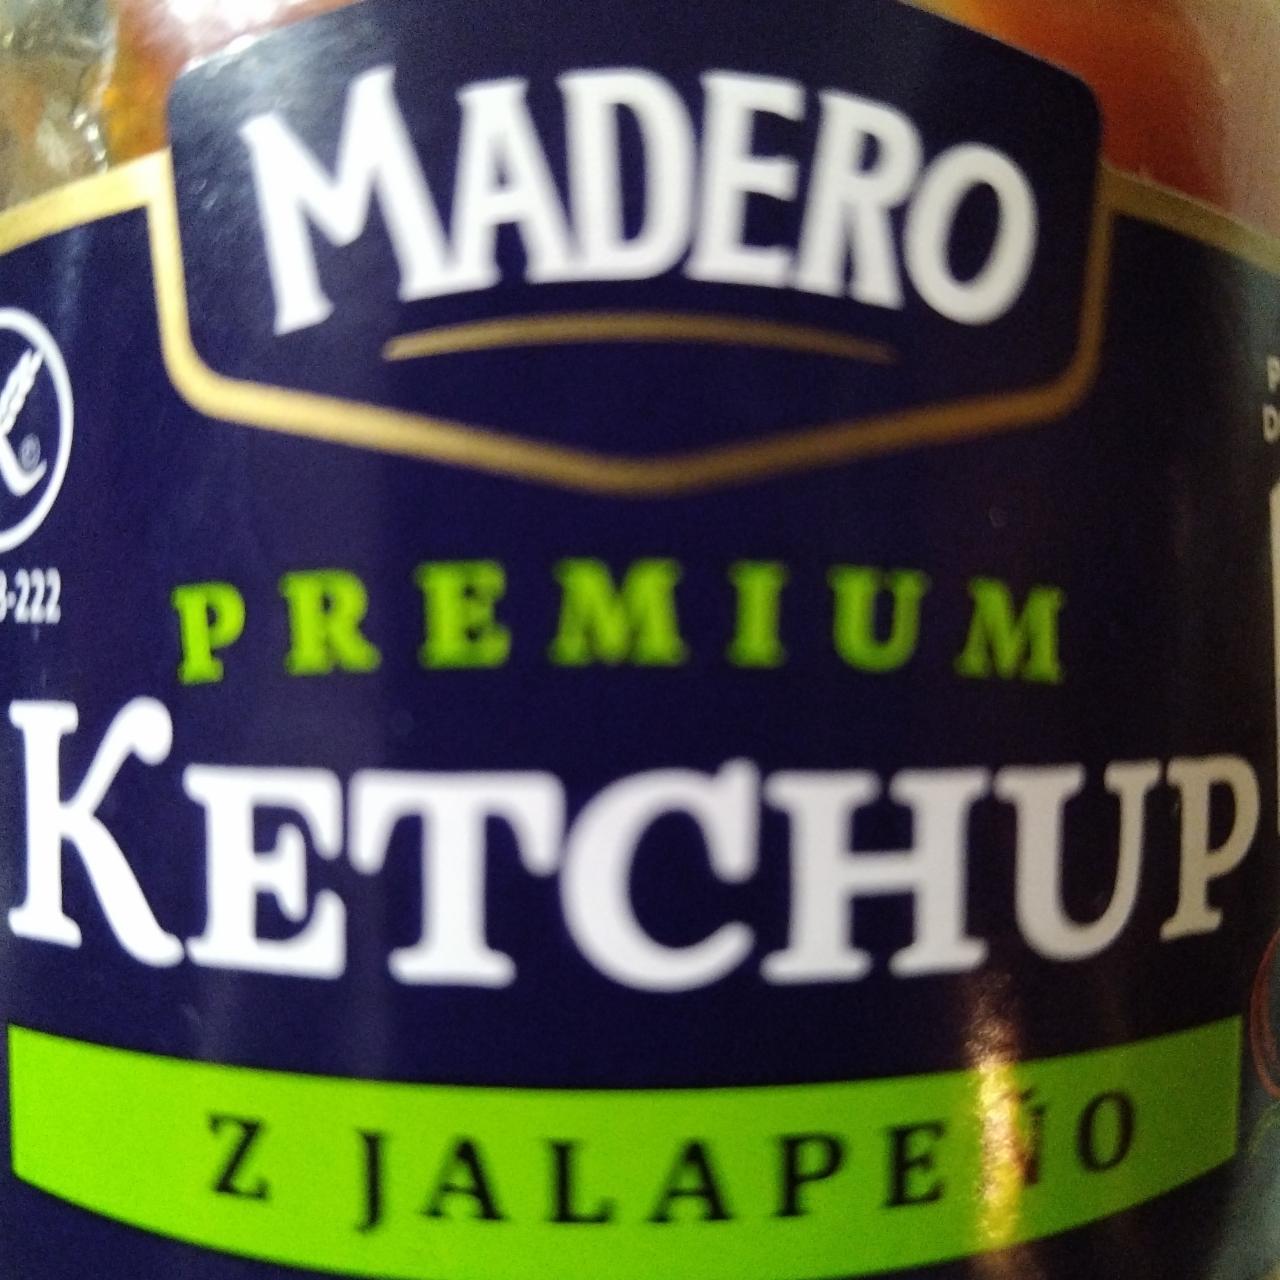 Zdjęcia - Ketchup Premium z jalapeno Madero